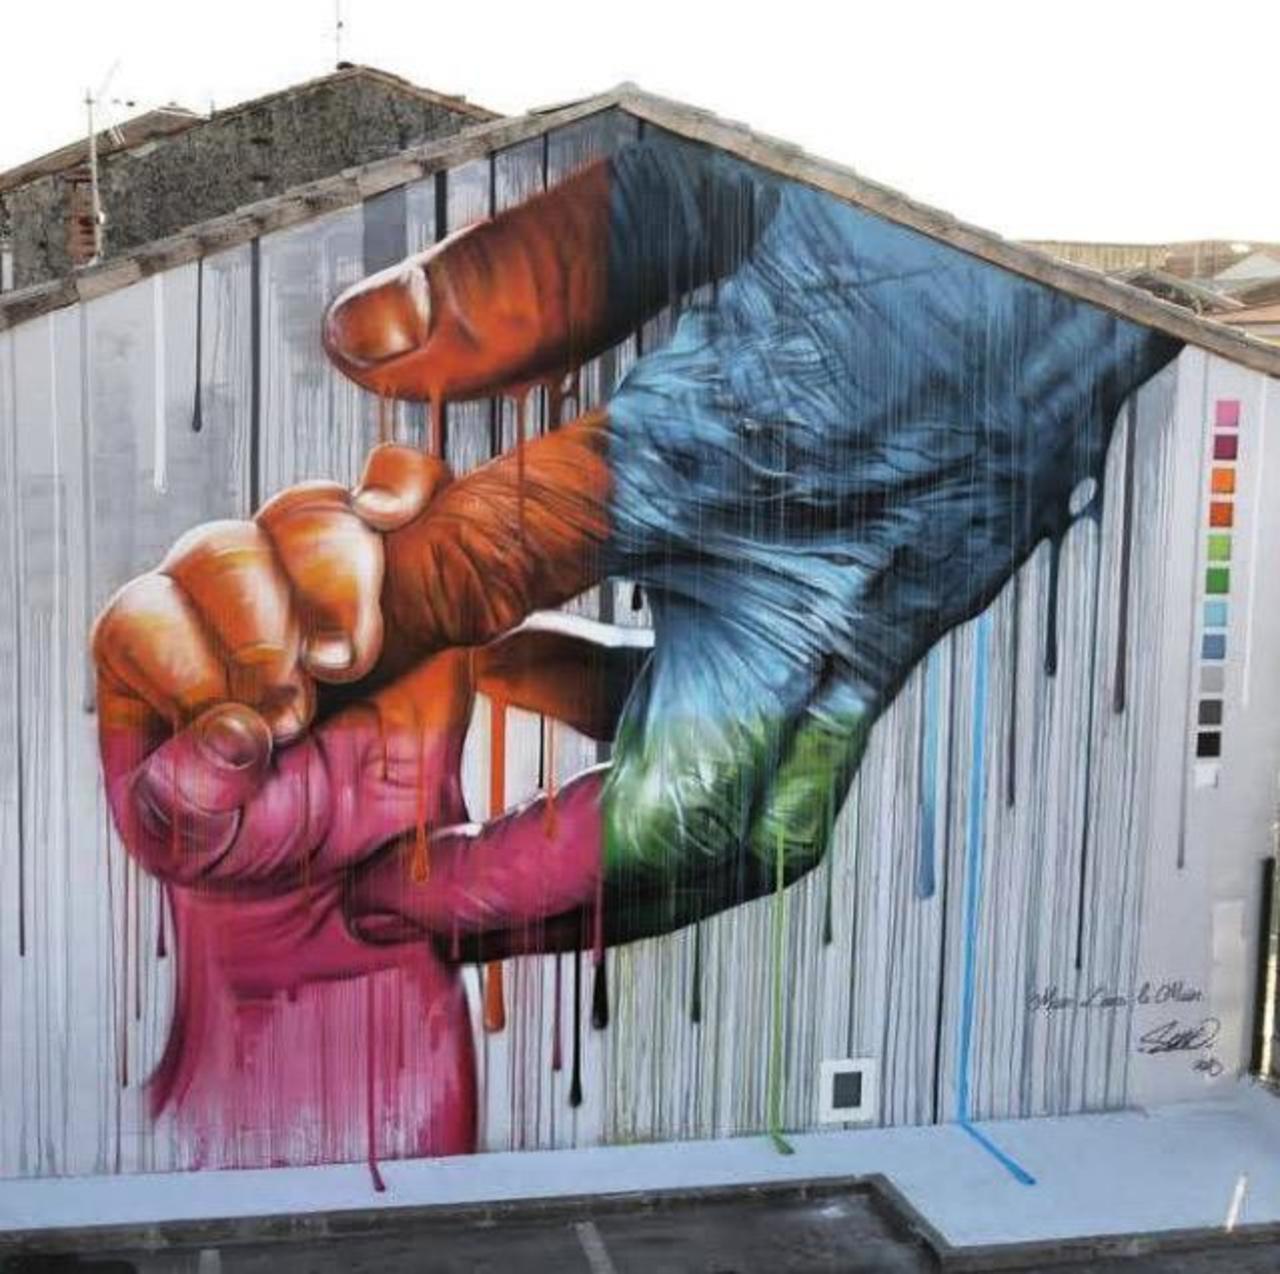 Seno Street Art 

#art #graffiti #mural #streetart http://t.co/aFGv6MAttL